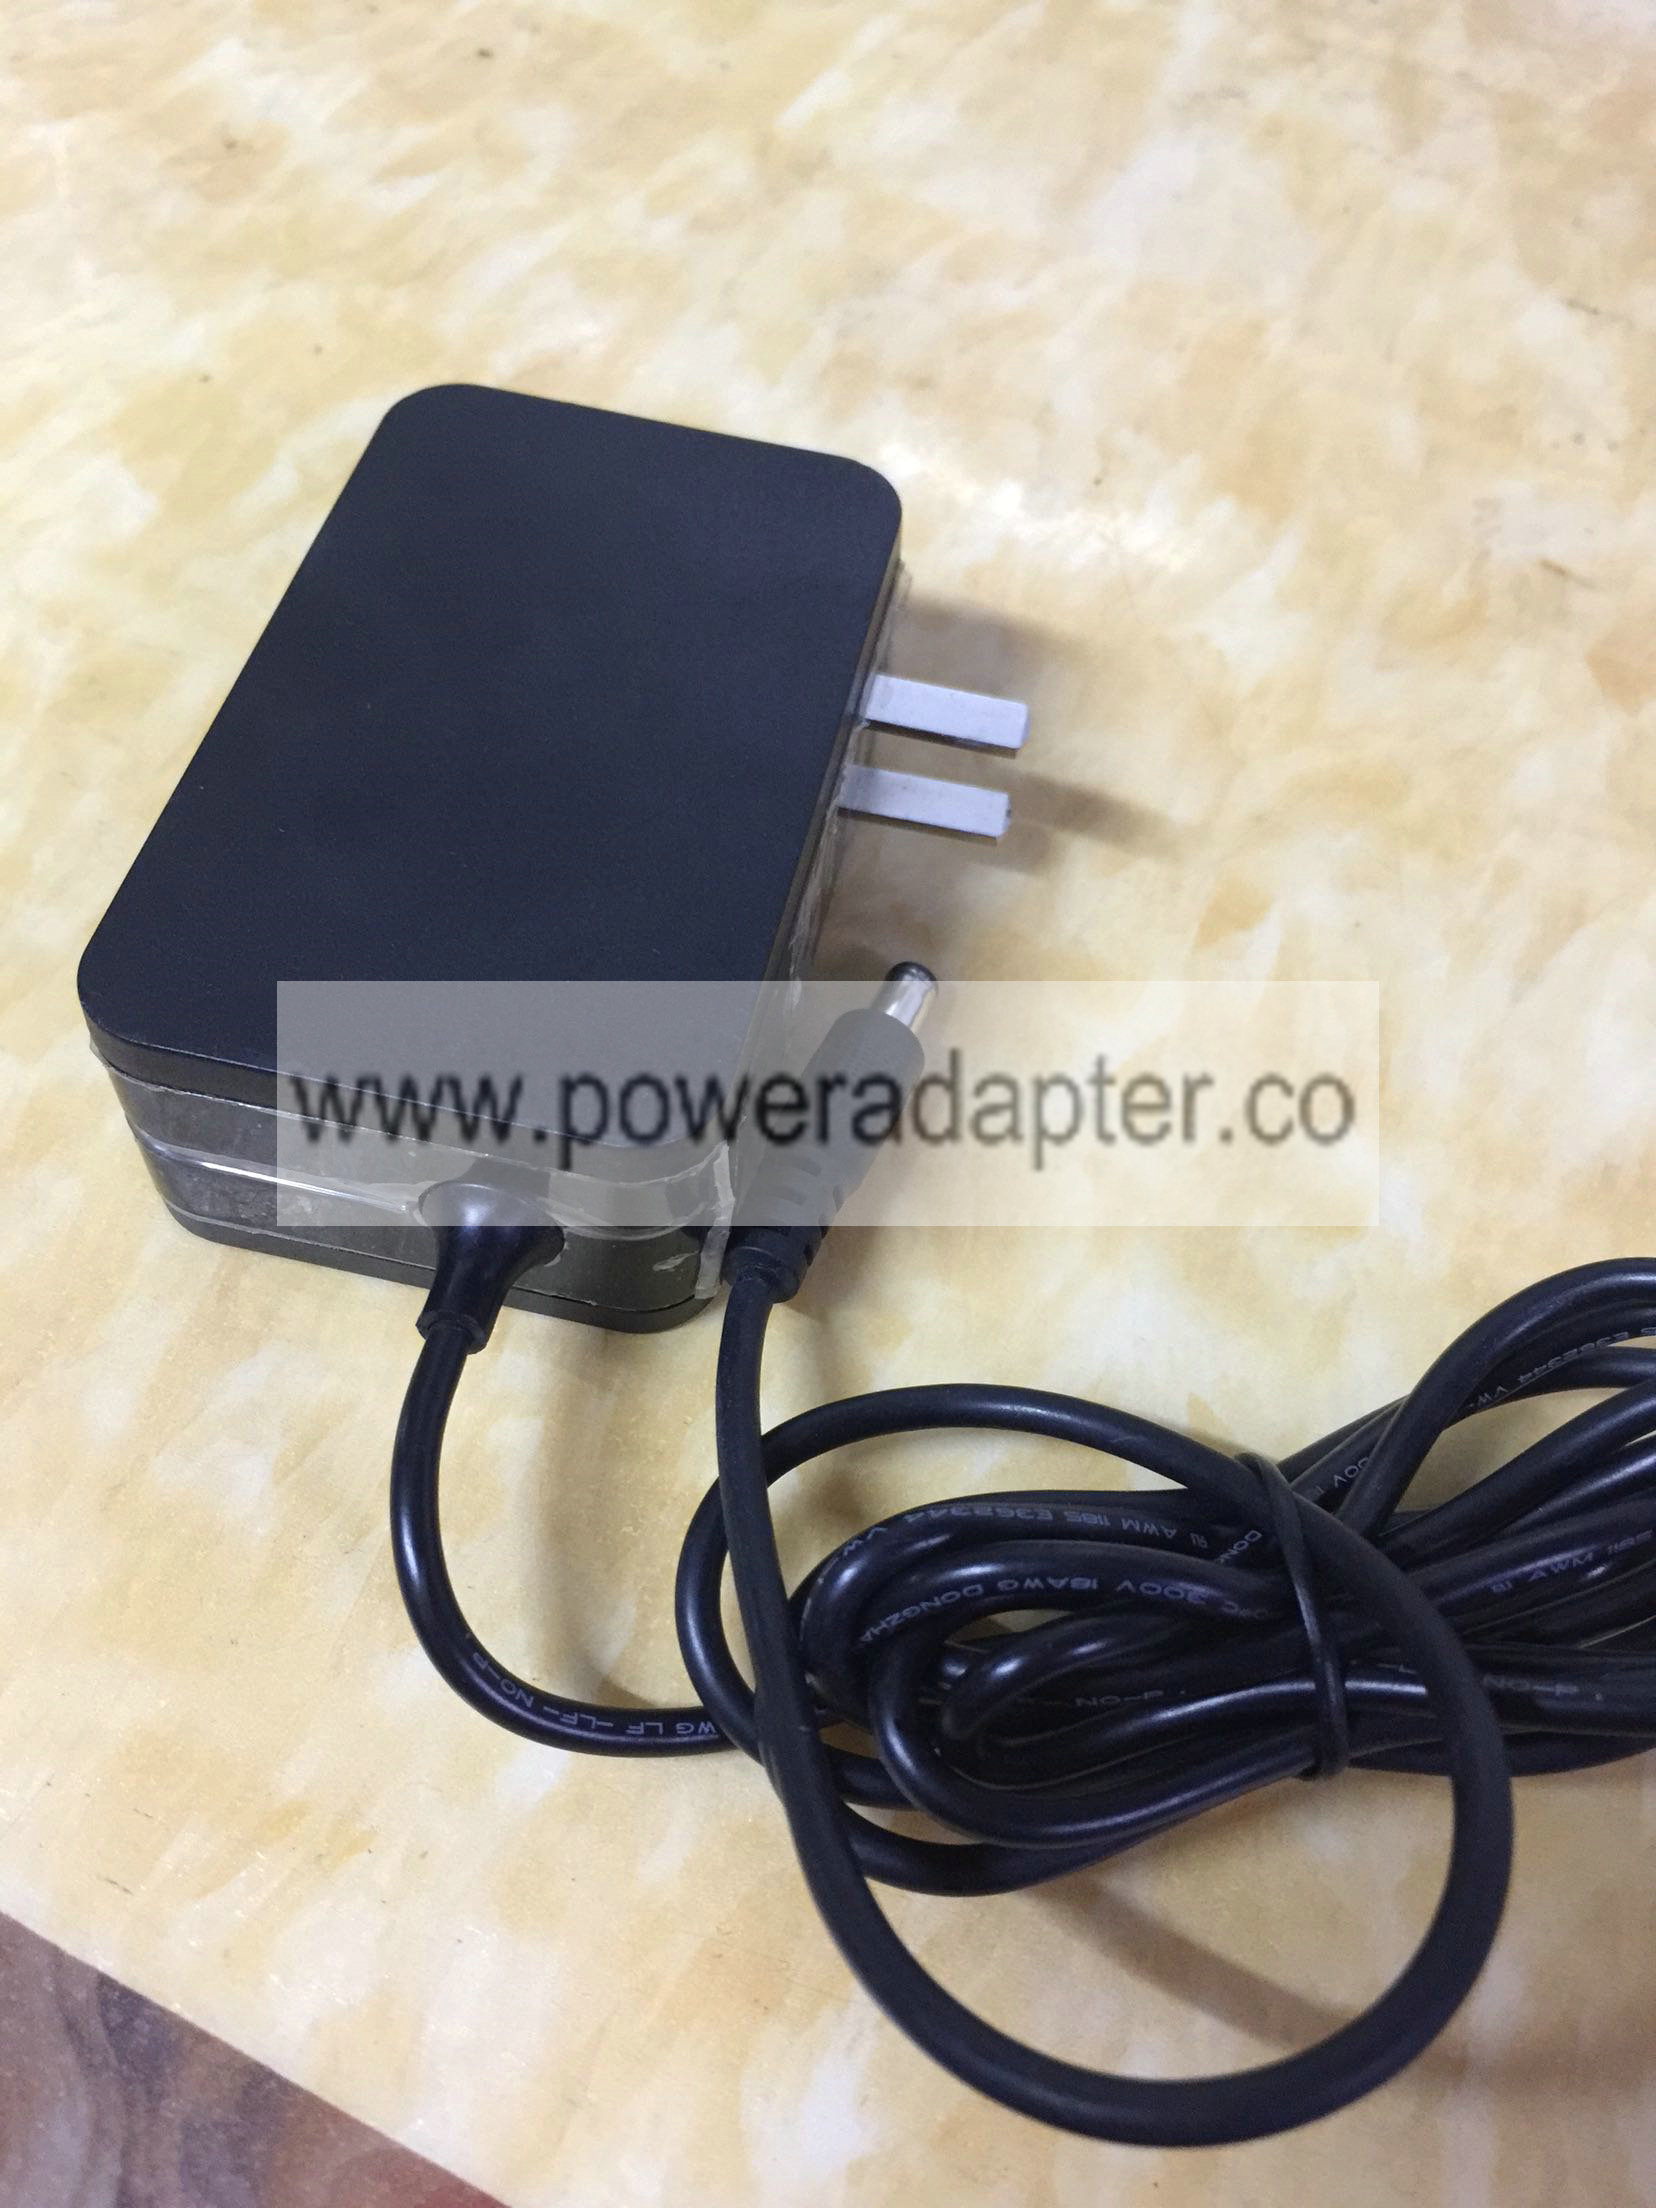 black new phicomm wifi K3C hub ac adapter 12V 3A tip 5.5*2.5 YH-AE-120A300-CH brand: PHICOMM output:12V 3A model:ʌ